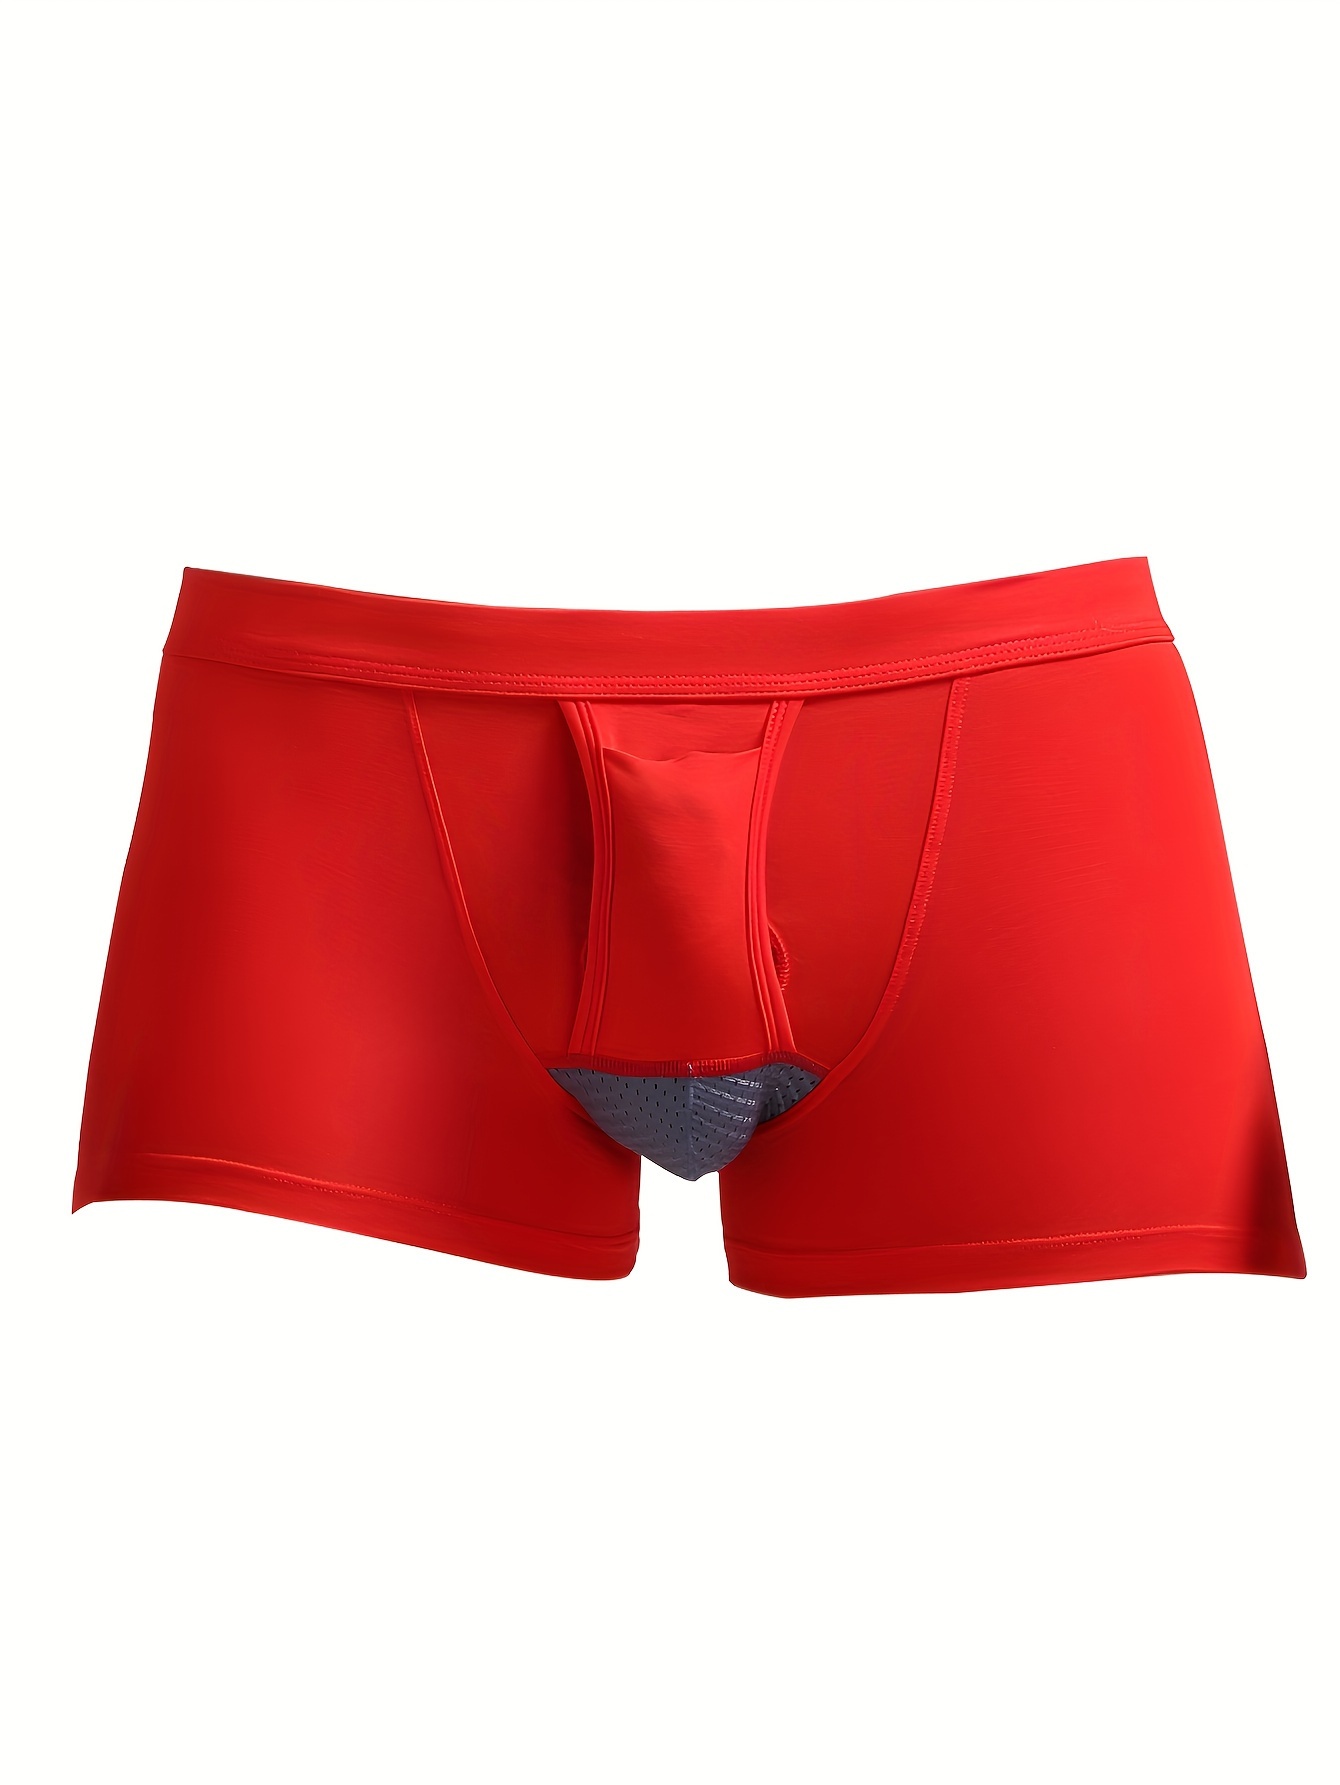 Men's Sexy Bulge Enhancing Briefs Underwear Low Rise Big Ball Pouch Wide  Waistband Flex Stretchy Briefs